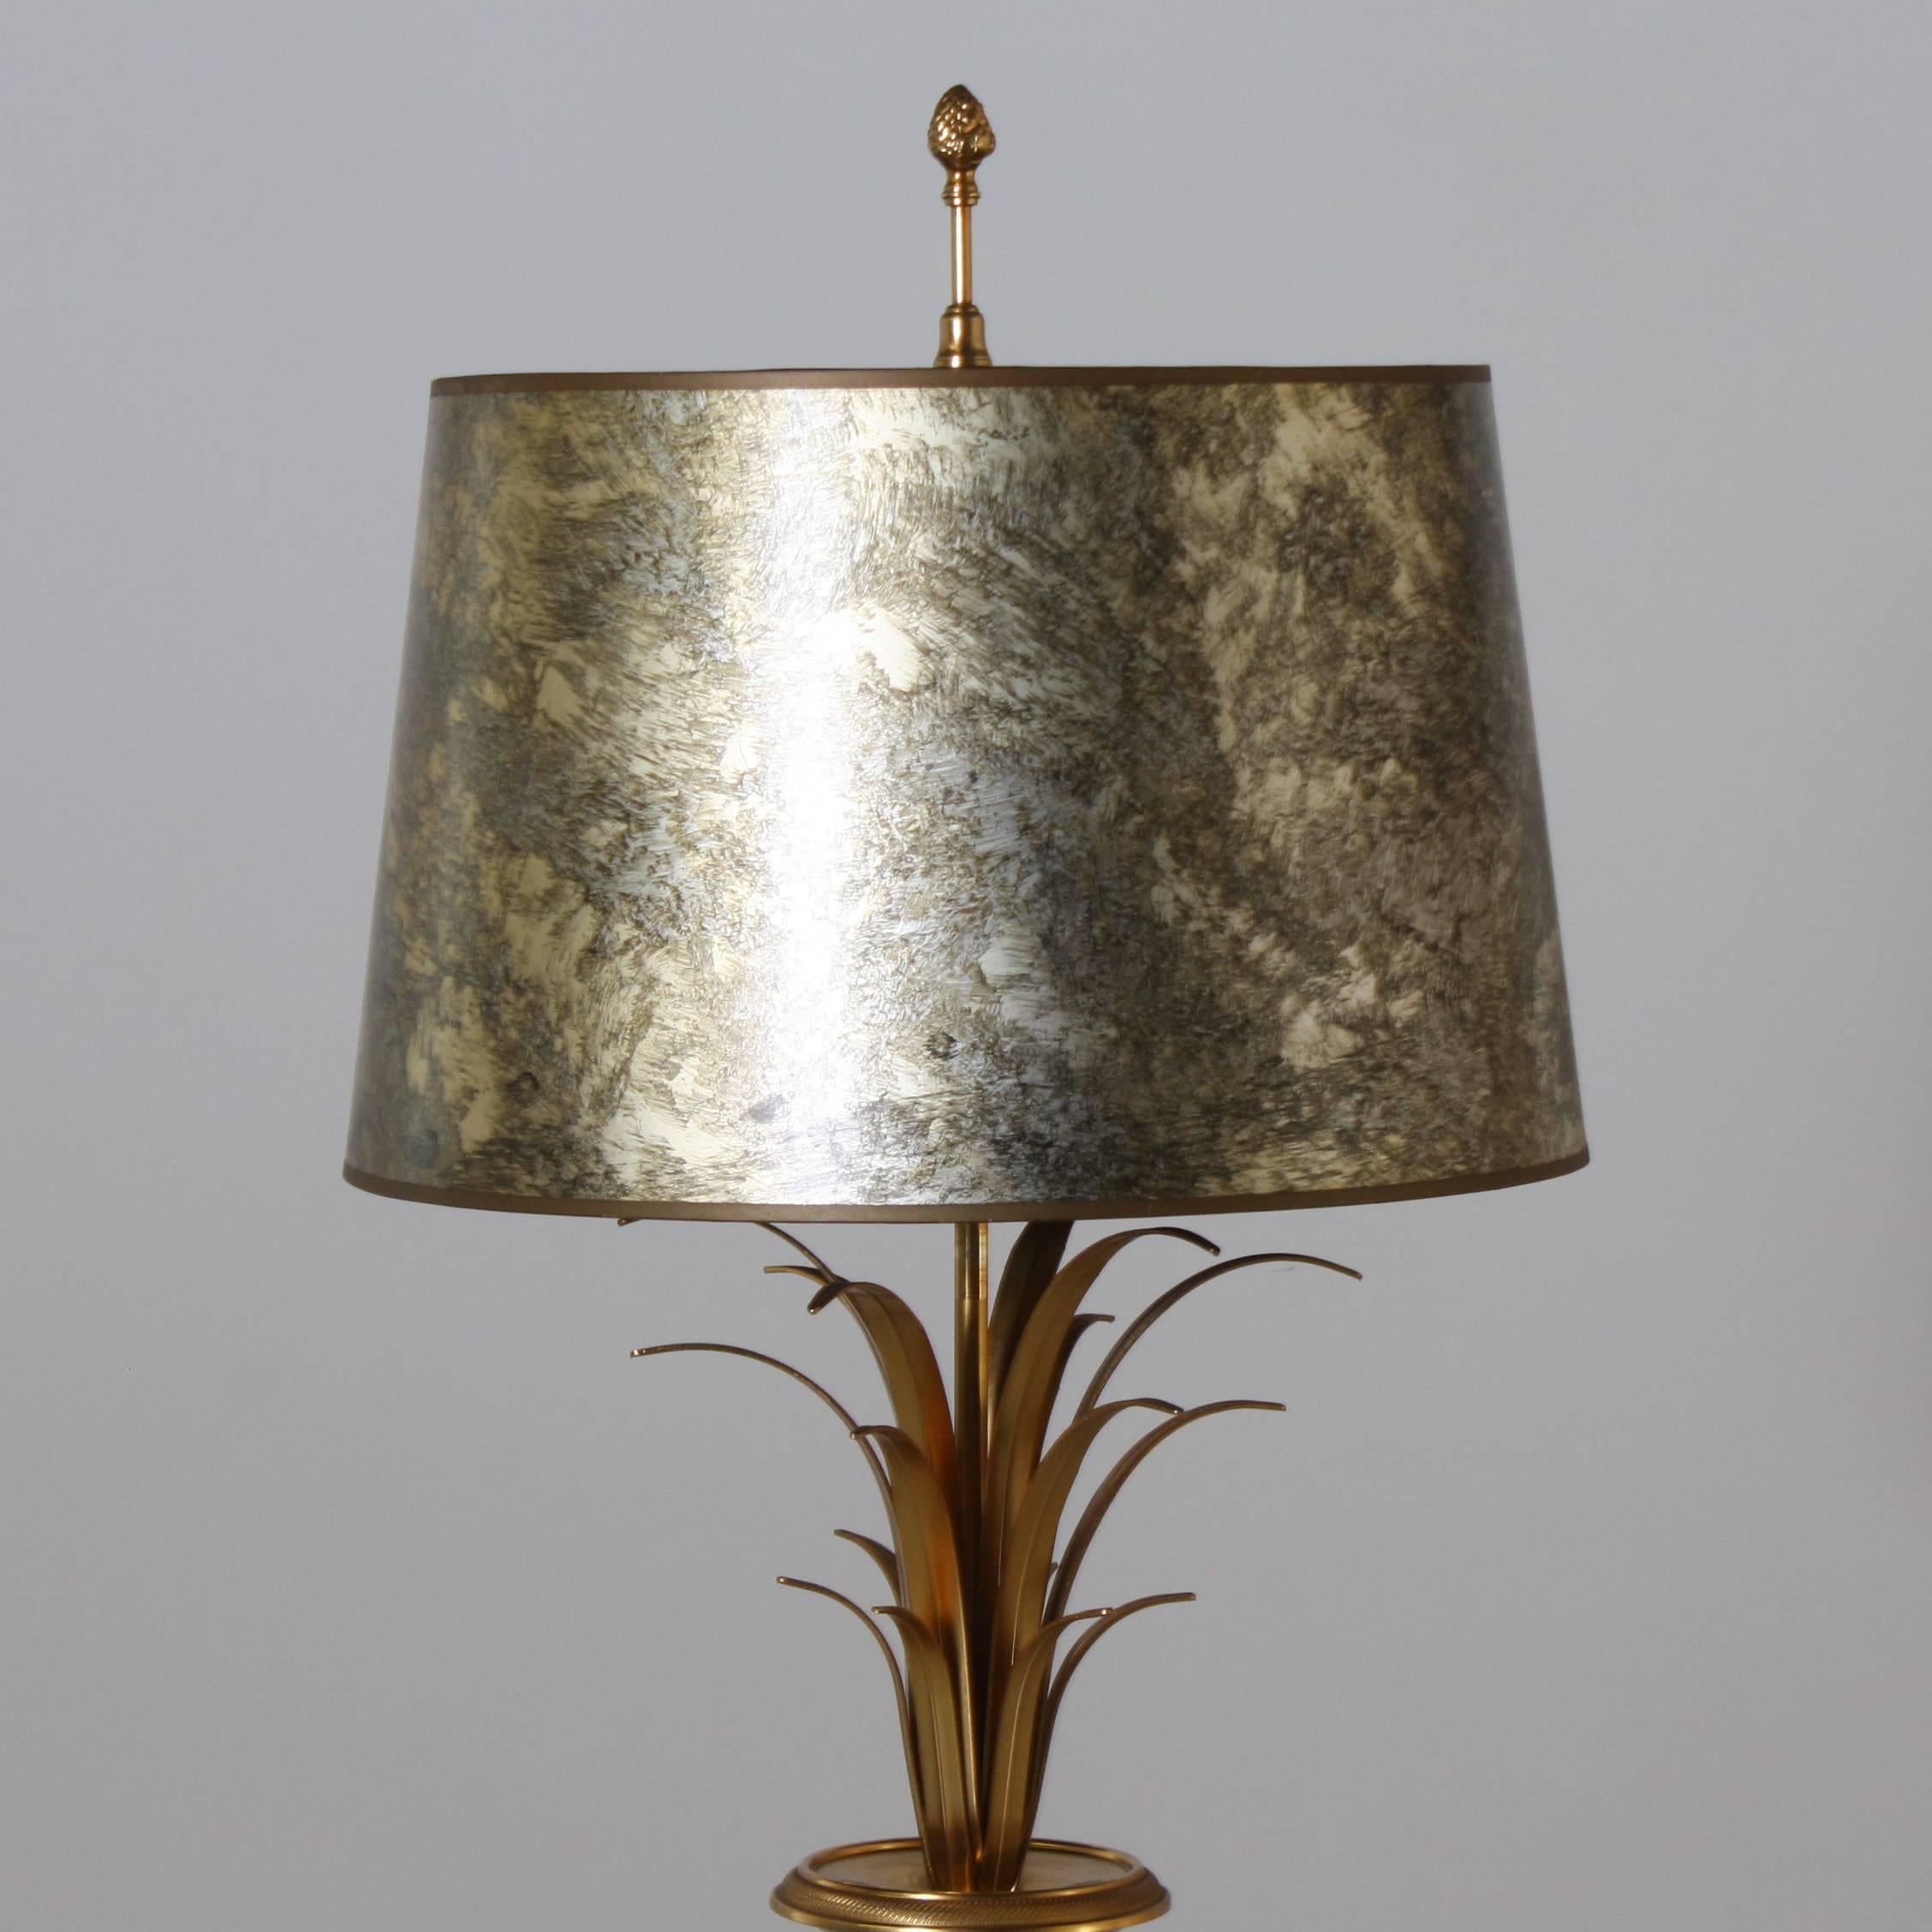 Maison Charles wheat lamp with original metal shade and original base. 3 way socket, 50/100/150 watt. Brass hardware. Original finial. Gold twisted silk cording.

